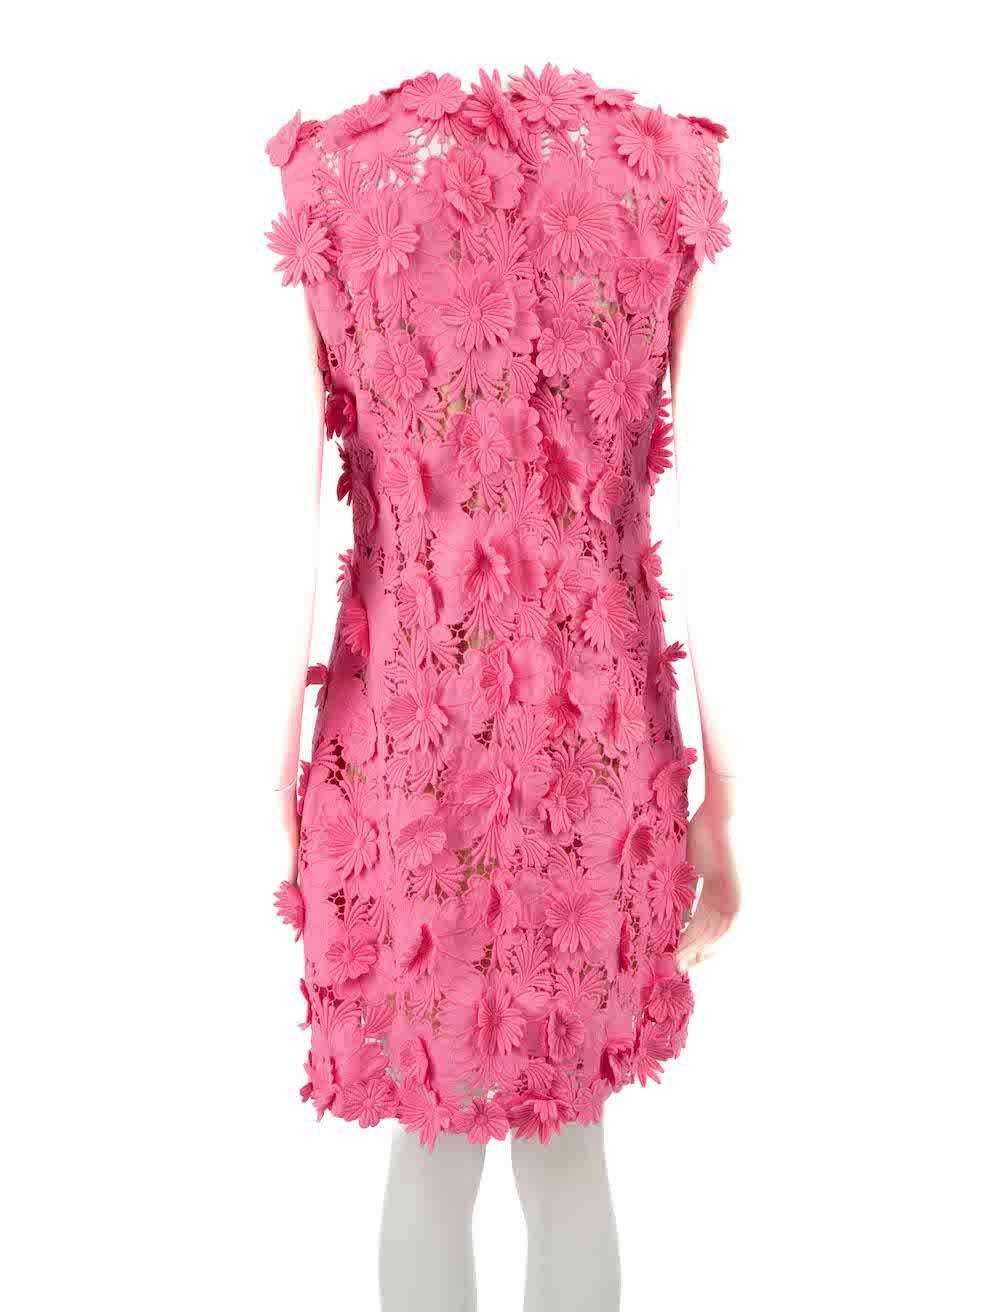 Oscar de la Renta Pink Floral Appliqué Guipure Lace Dress Size L In New Condition For Sale In London, GB